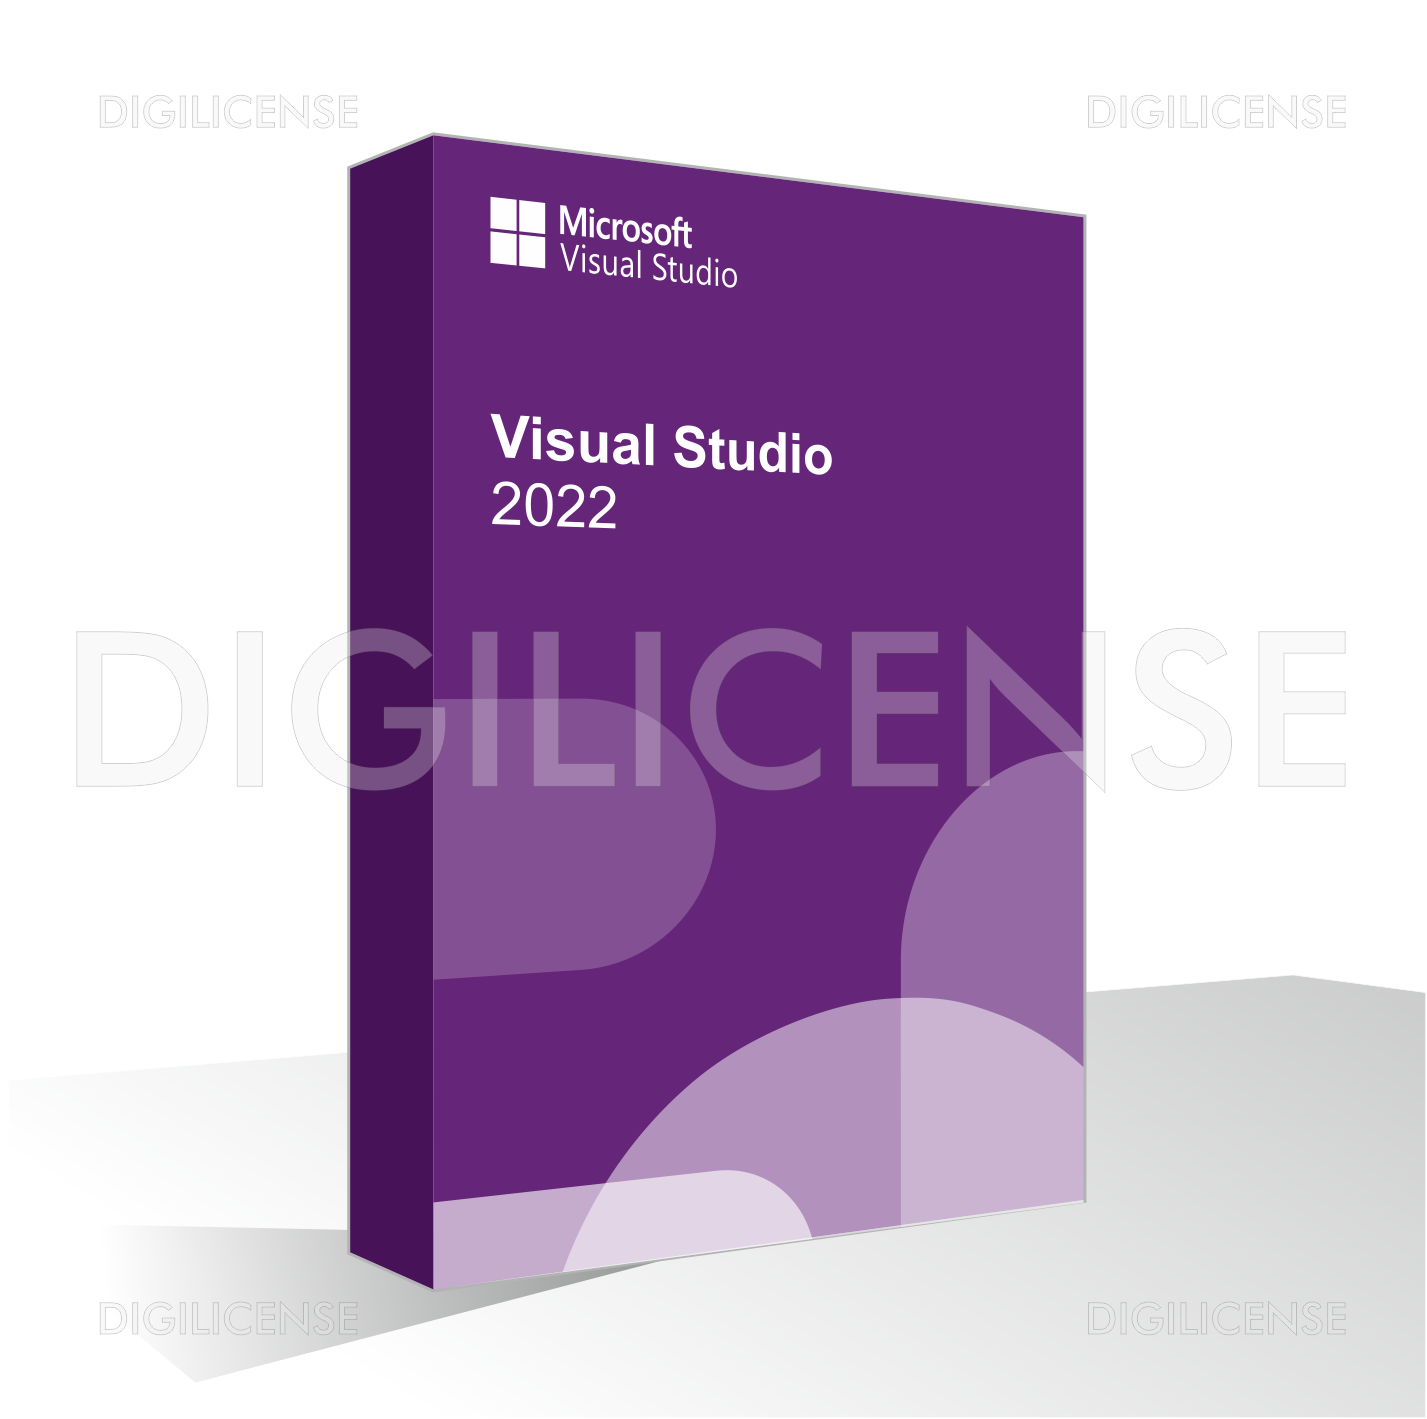 Microsoft Visual Studio 2022 Professional - 1 device - Perpetual license -  Business license